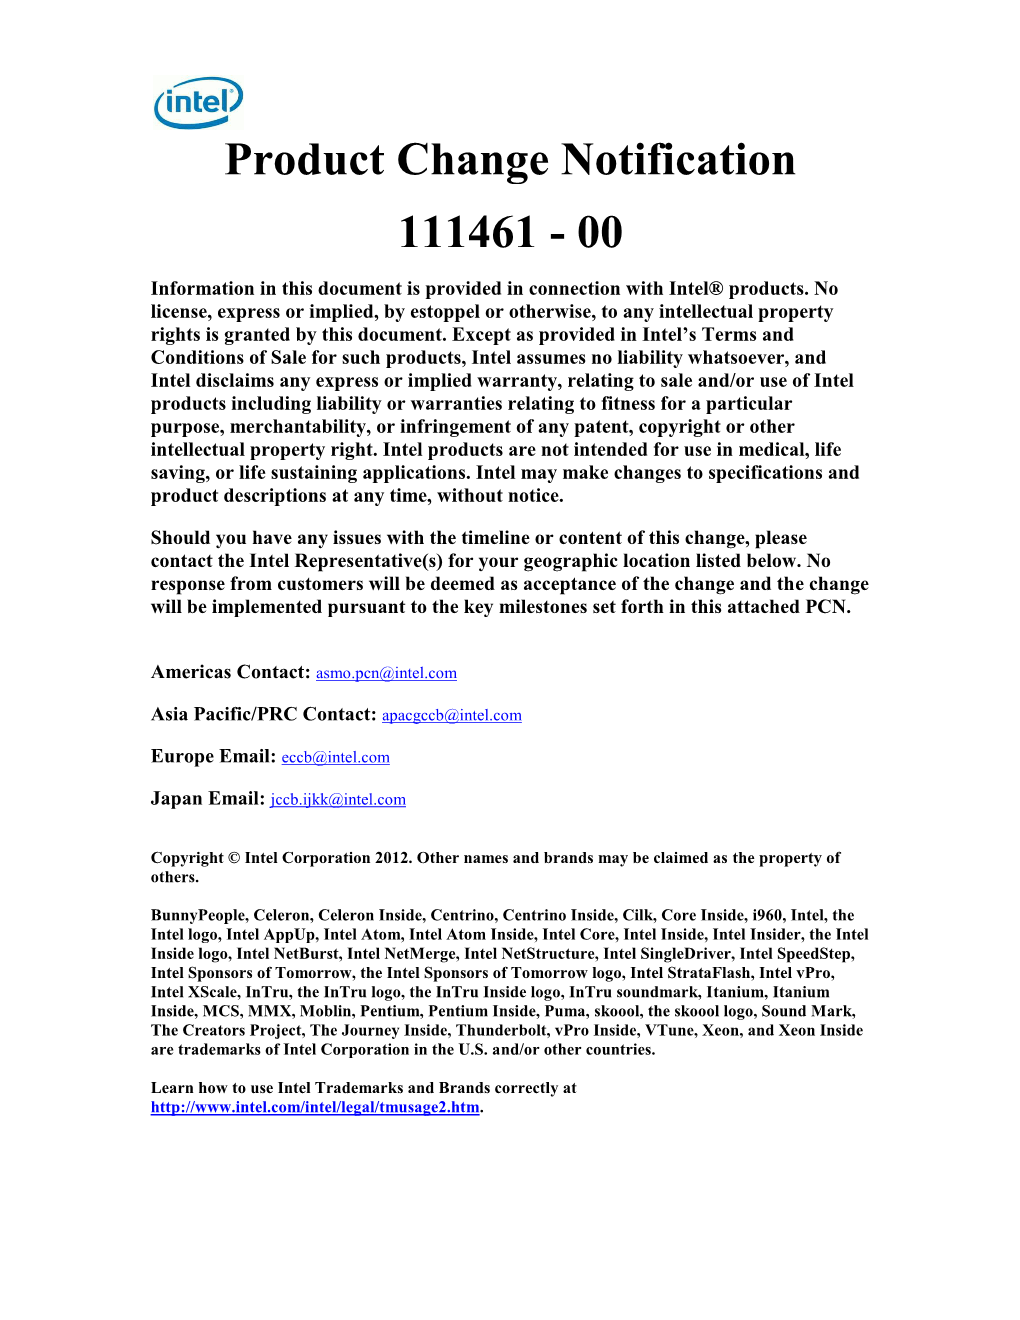 Product Change Notification 111461